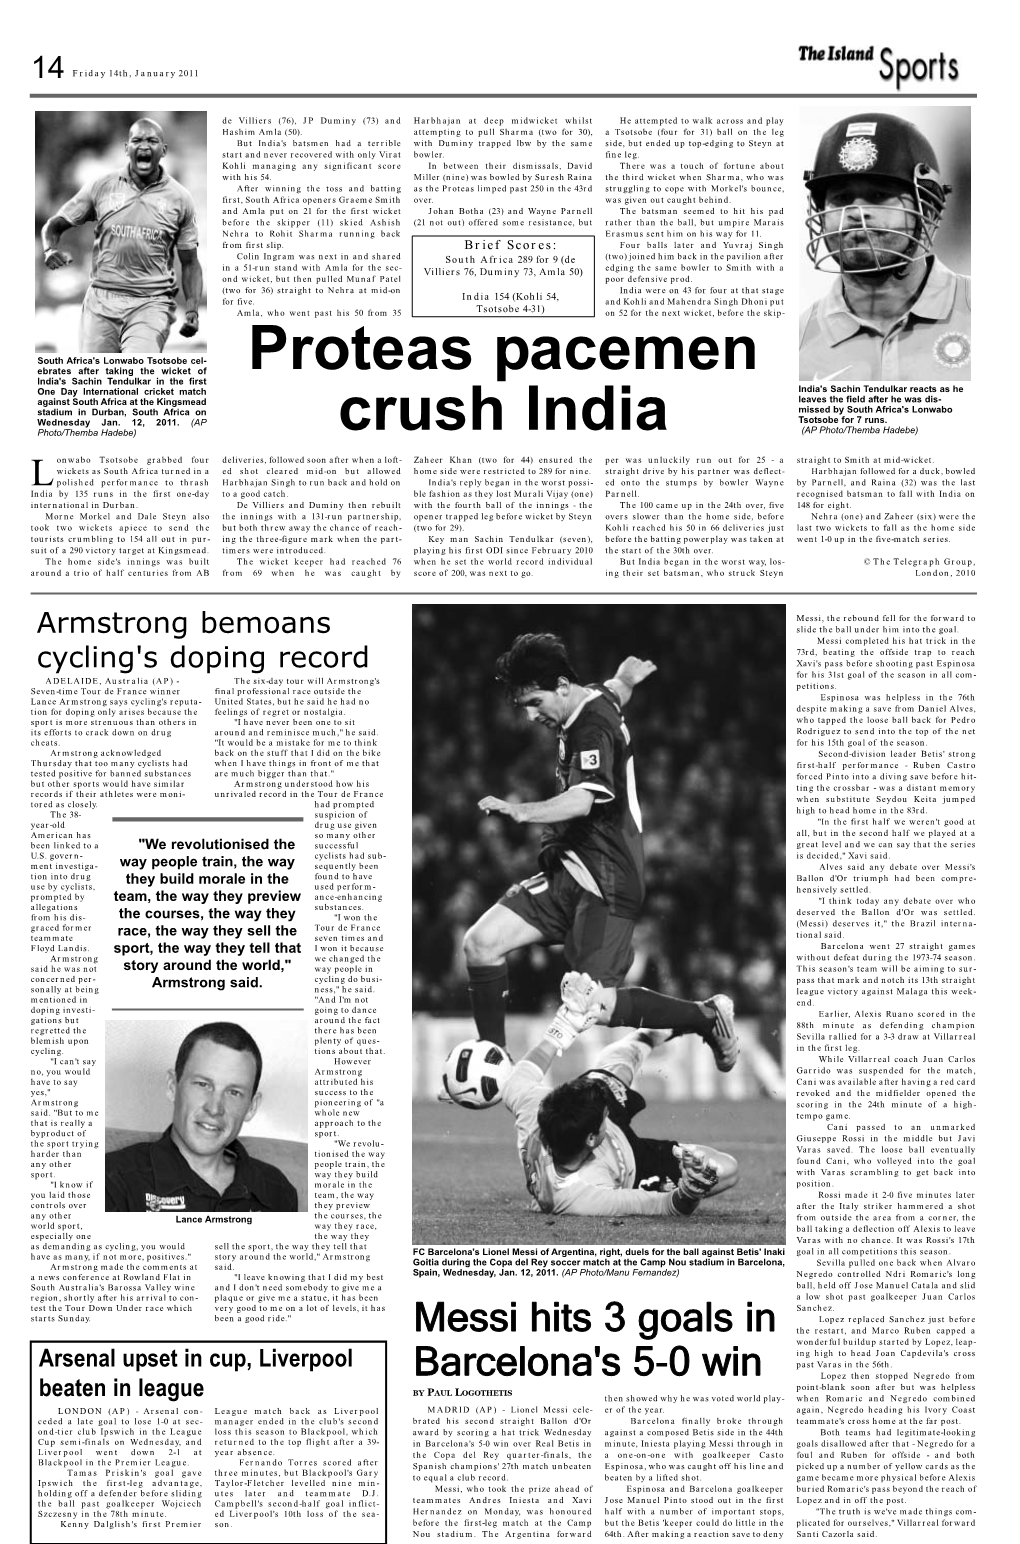 Proteas Pacemen Crush India